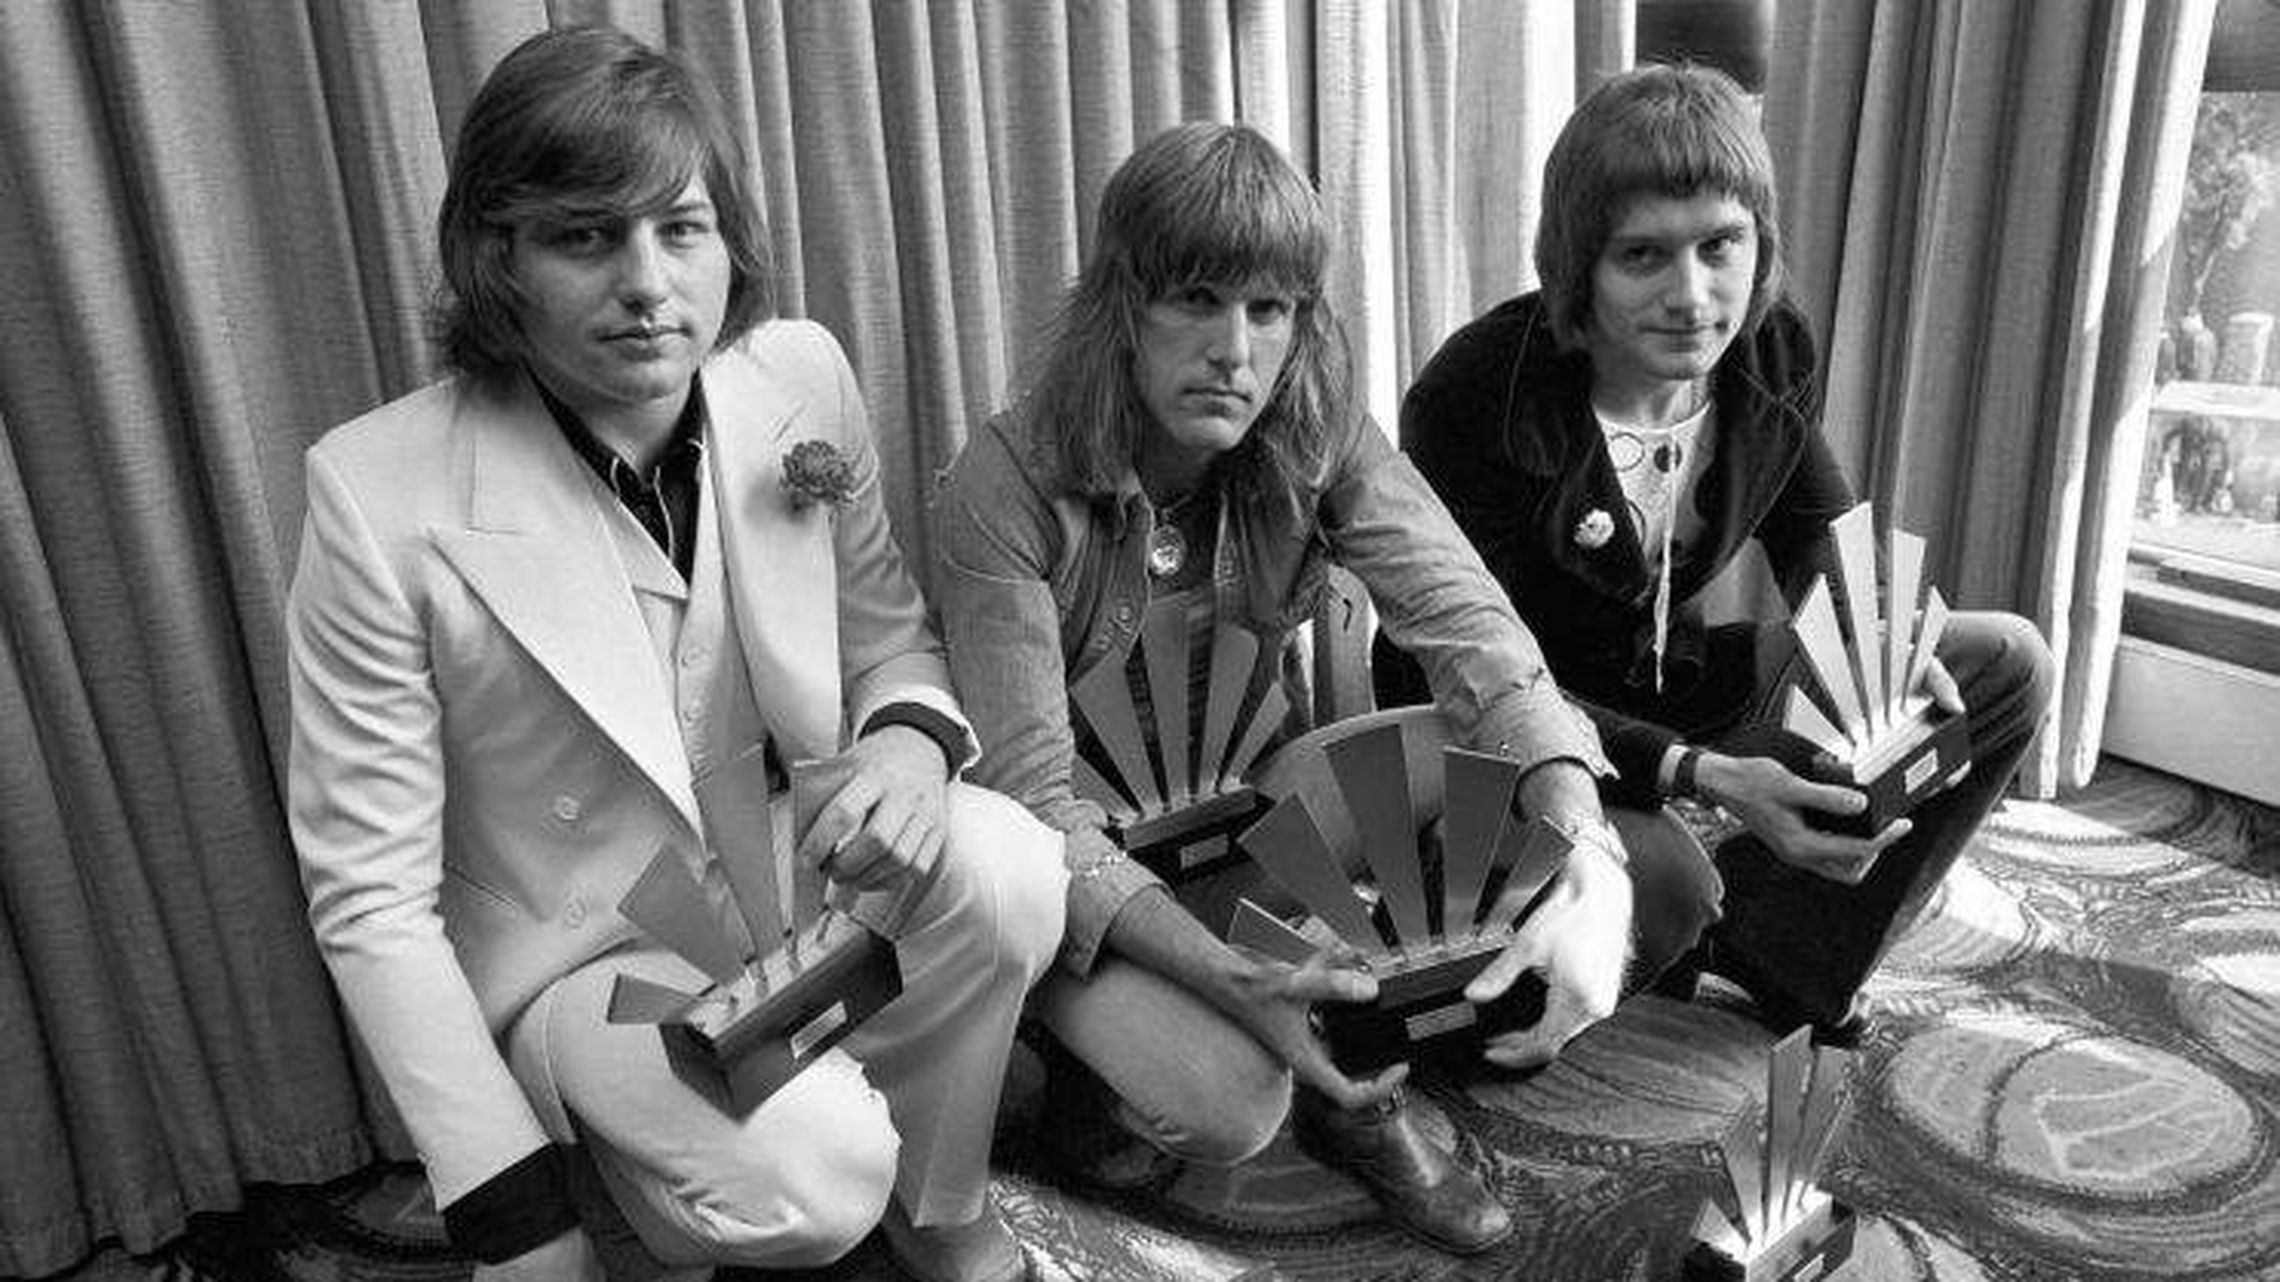 Emerson, Lake and Palmer founder Greg Lake dies